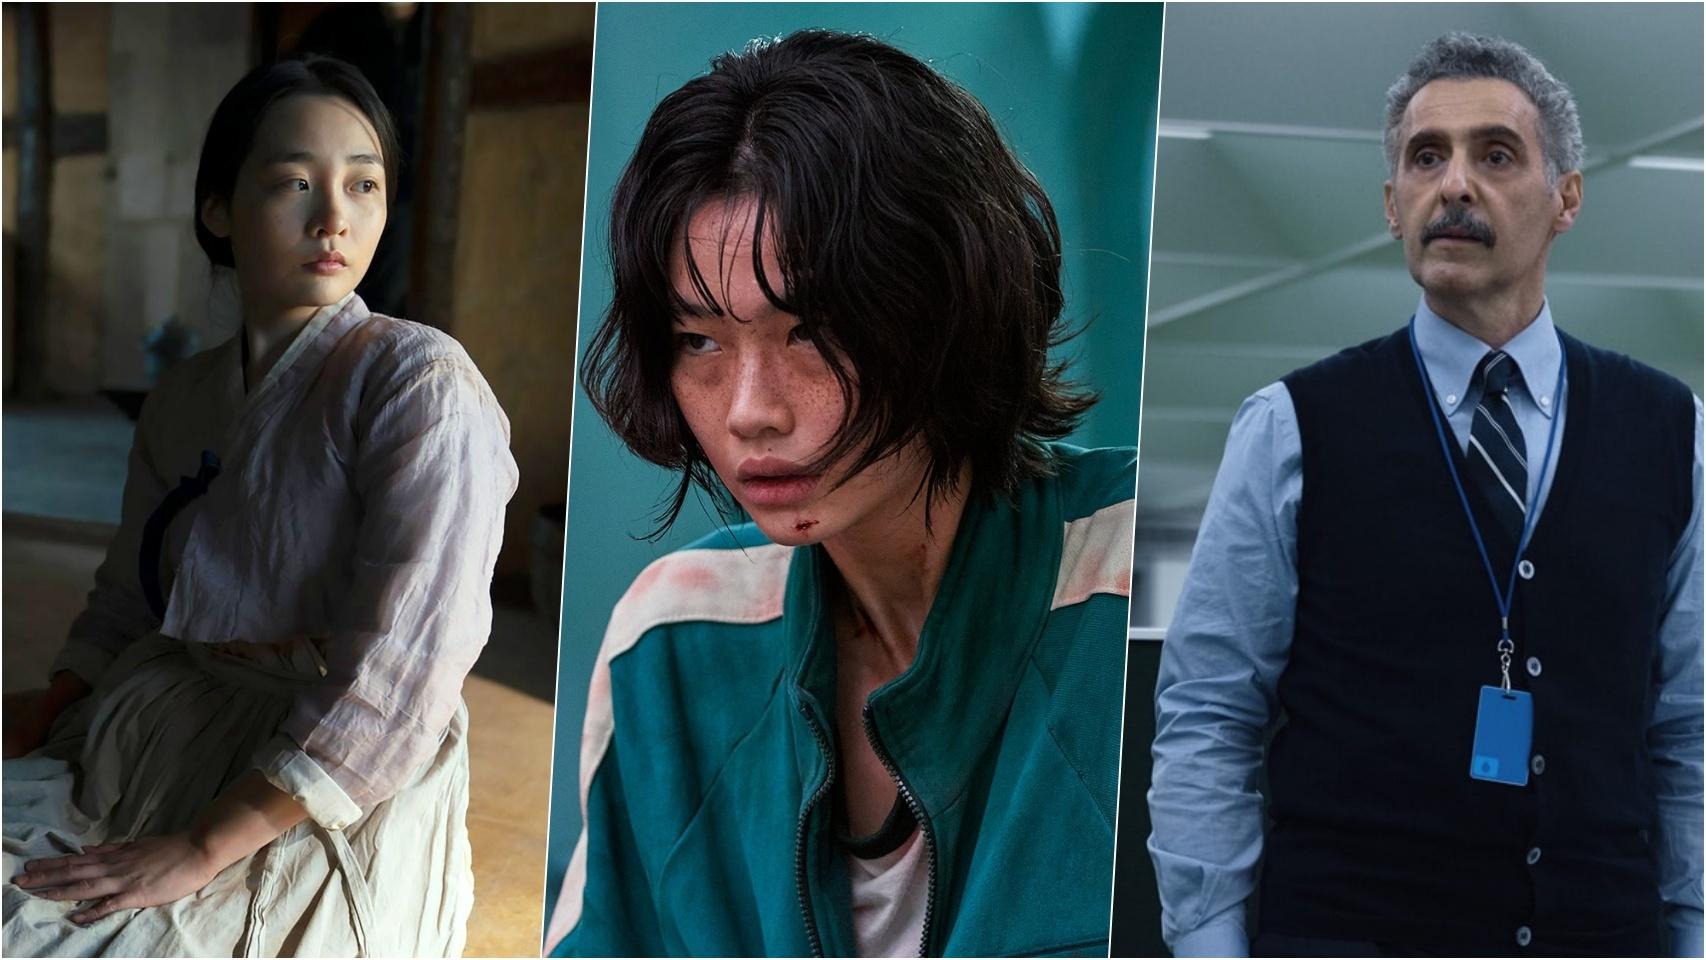 Minha Kim (Pachinko), Jung ho-yeon (El juego del calamar), John Turturro (Severance).